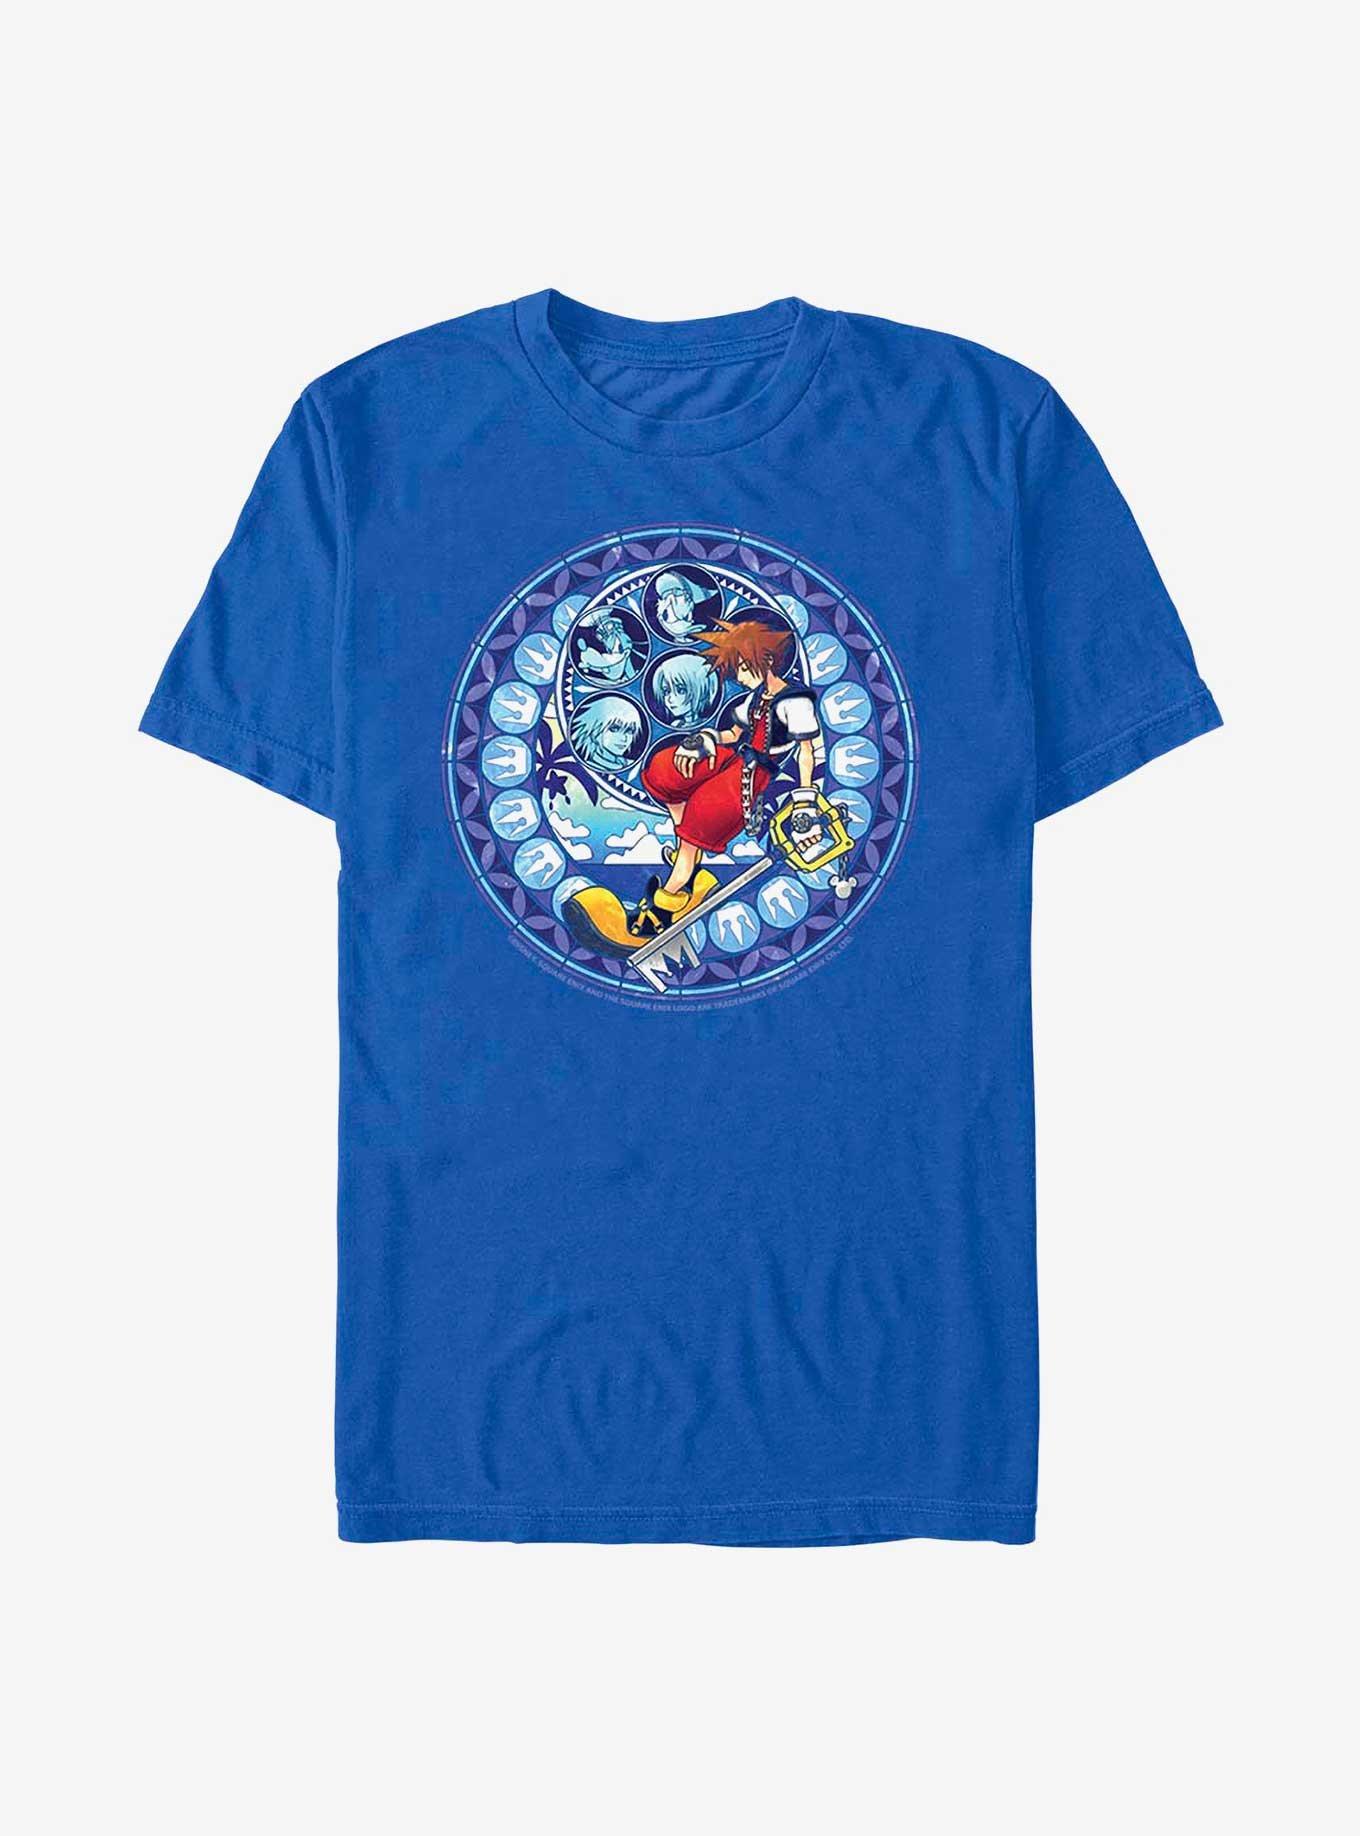 Disney Kingdom Hearts Stained Glass Sora T-Shirt, ROYAL, hi-res